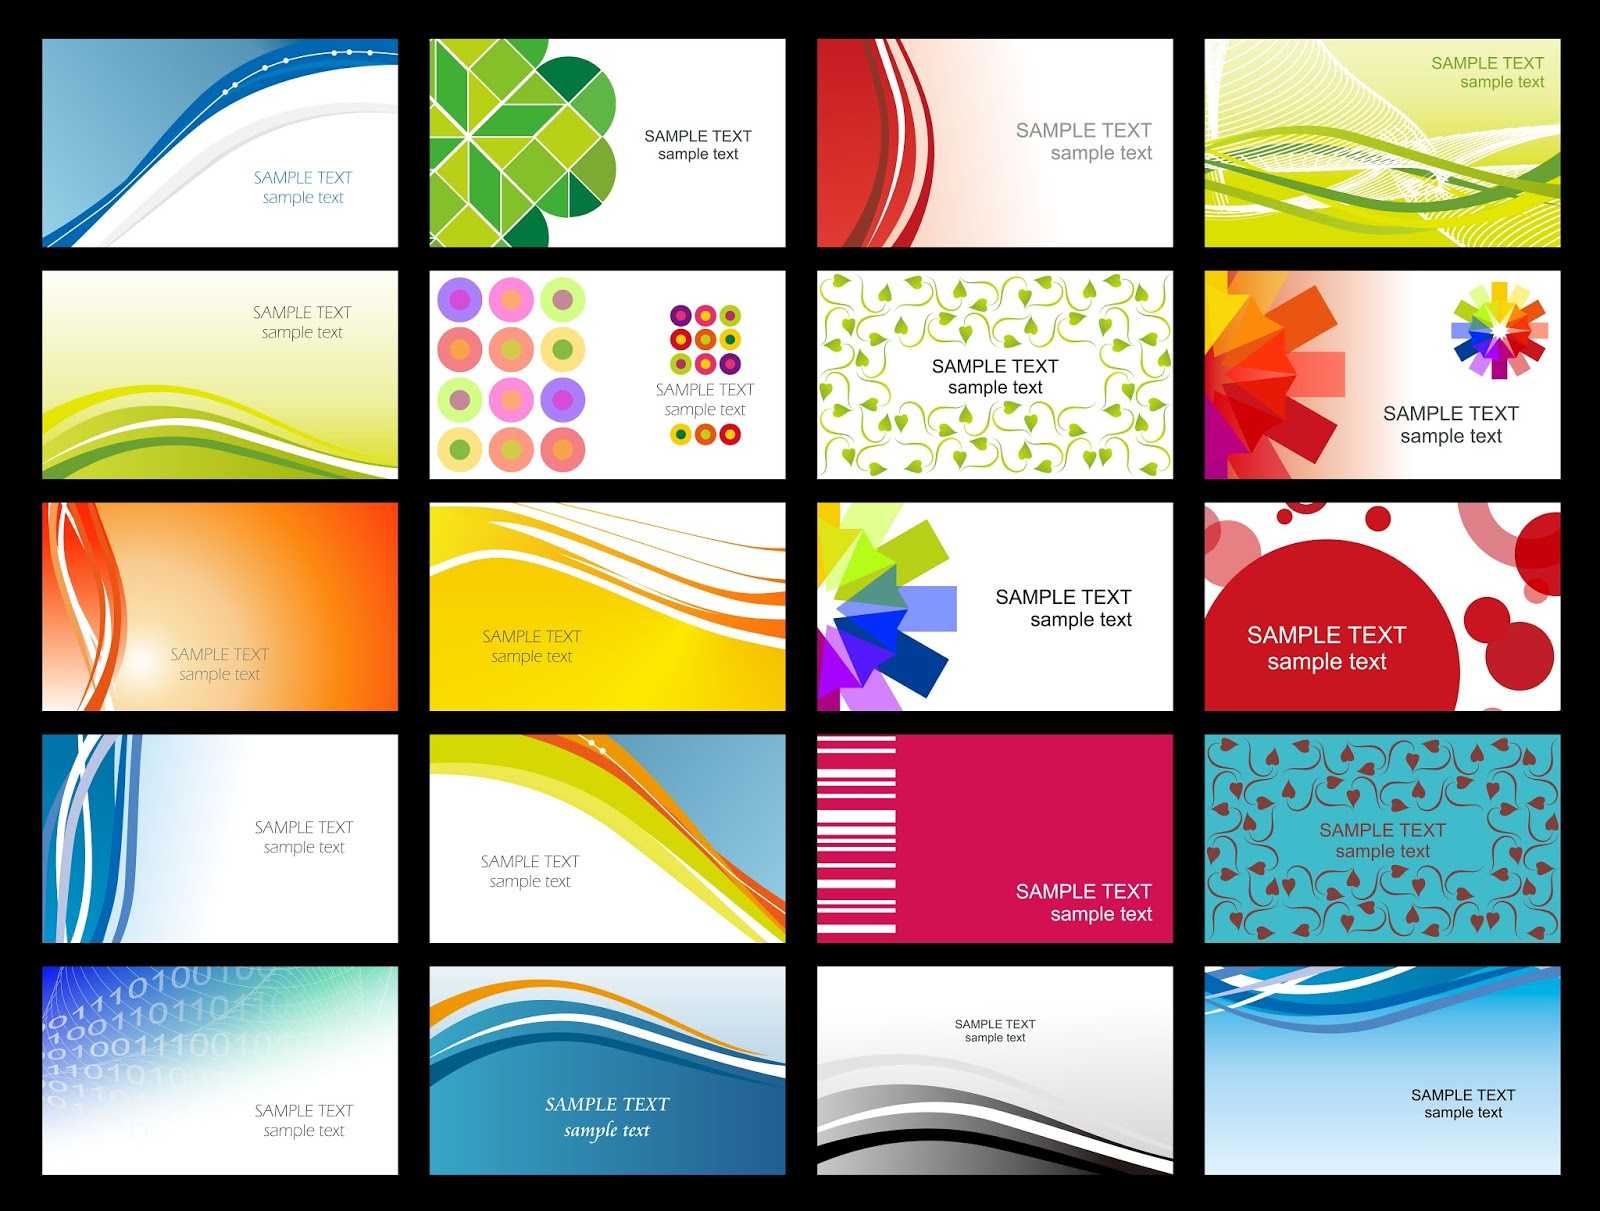 Printable Business Card Template – Business Card Tips Regarding Business Card Maker Template